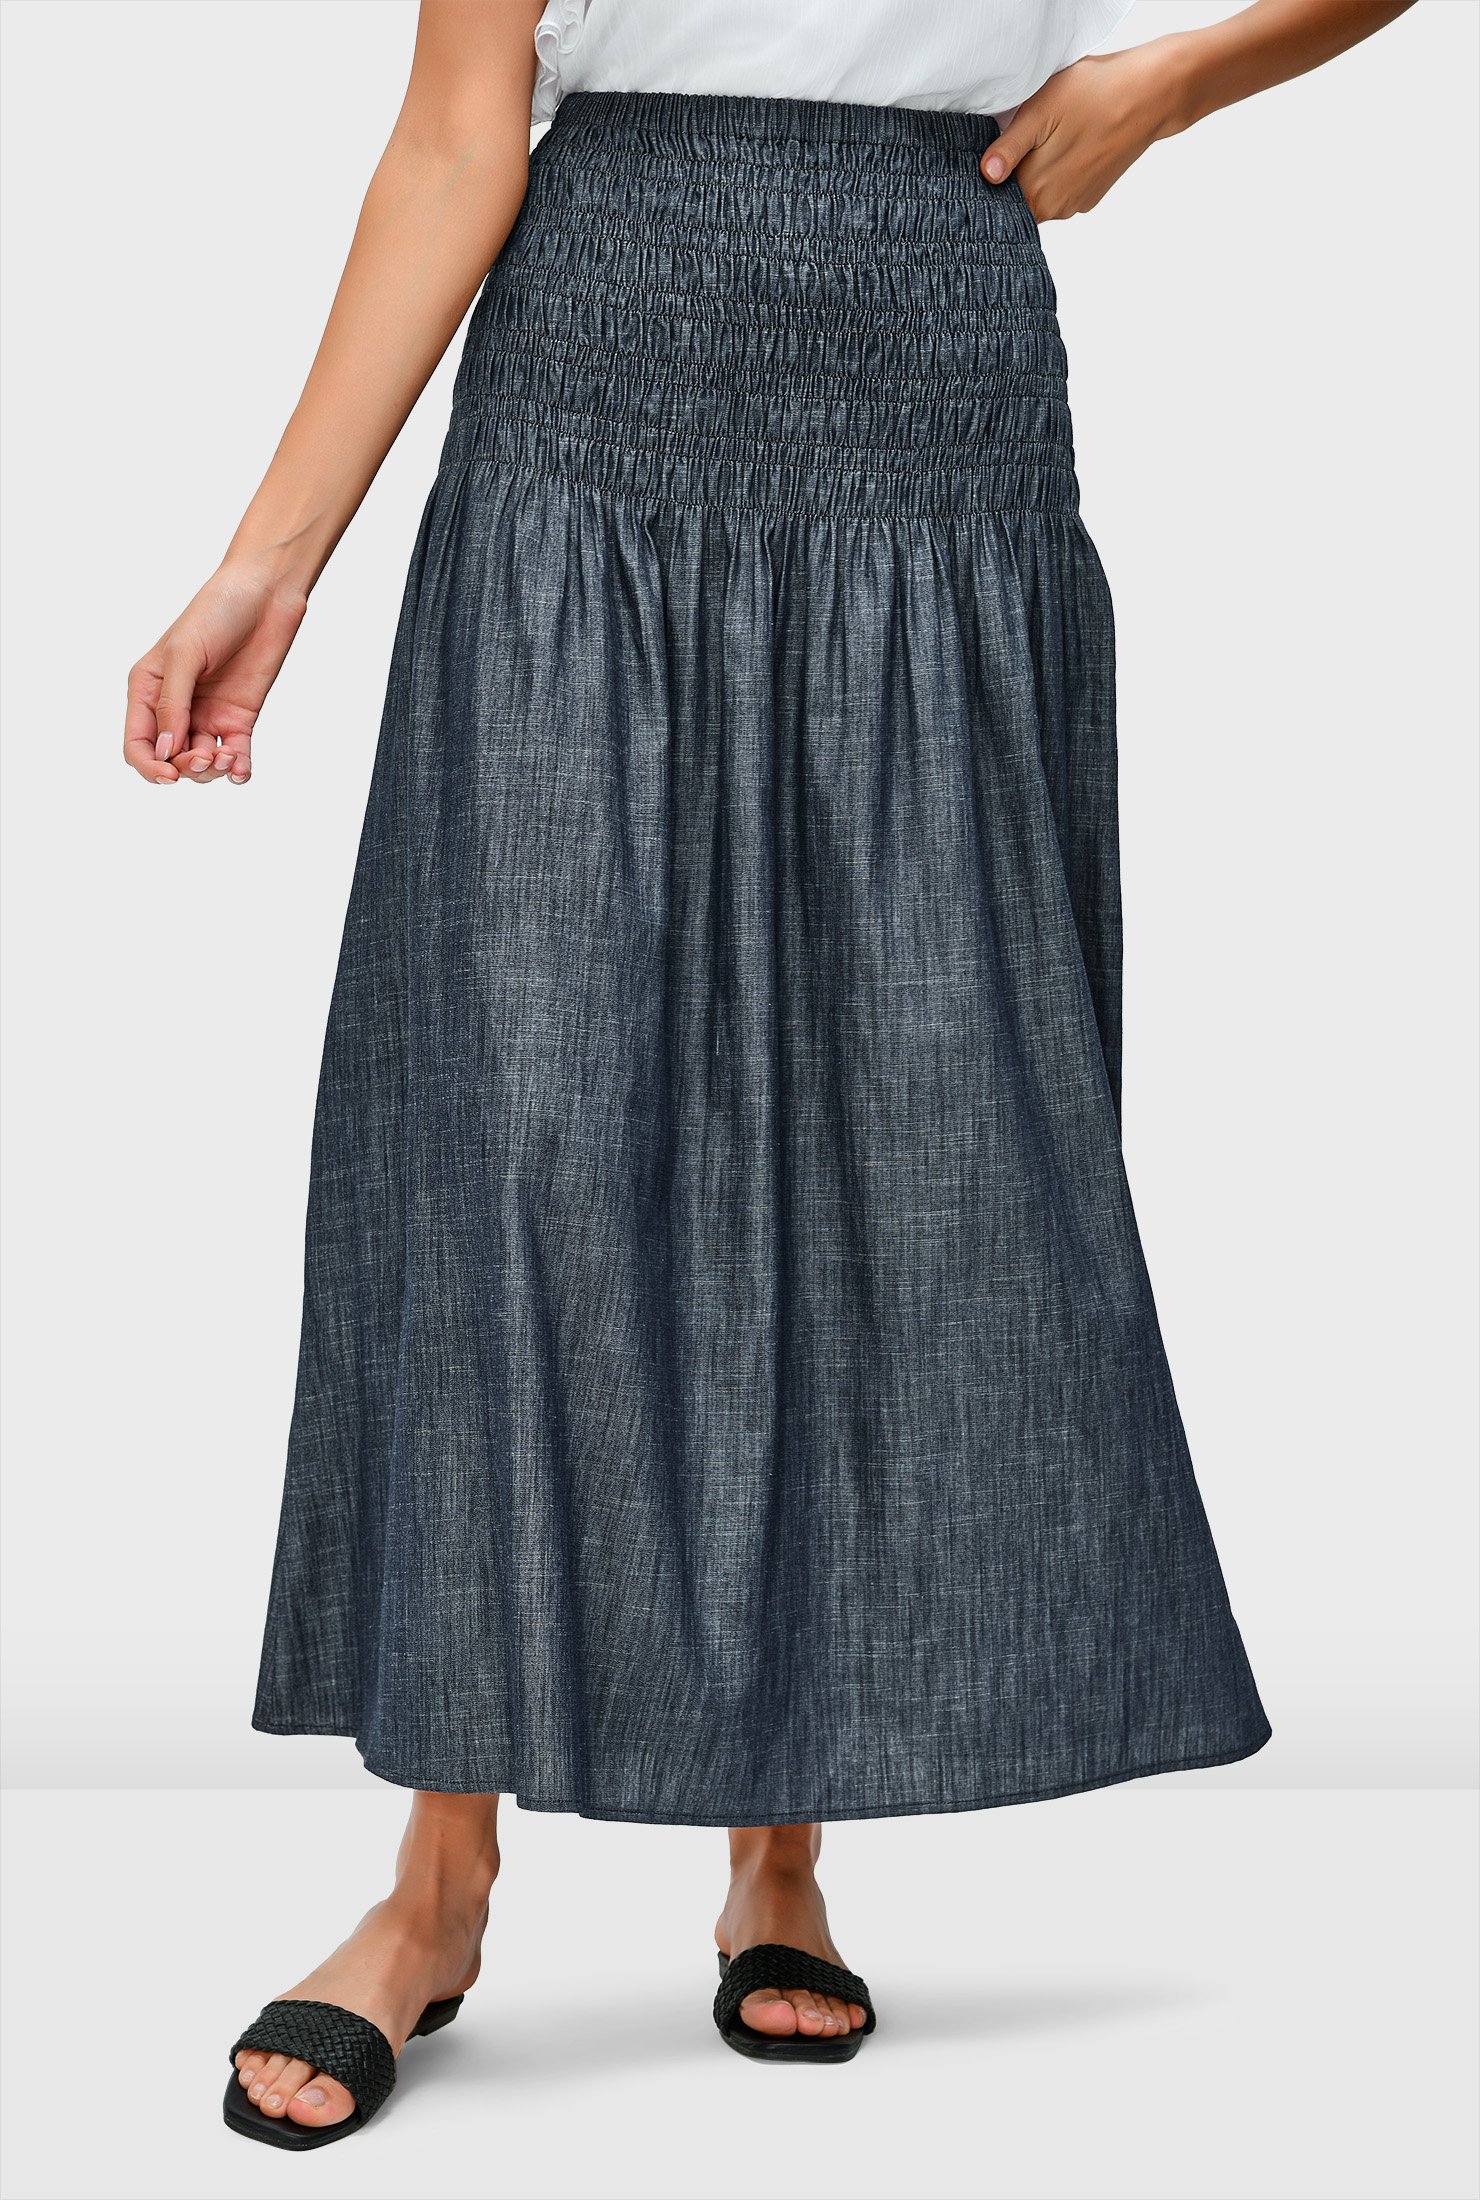 Shop Smocked elastic waist cotton chambray skirt | eShakti